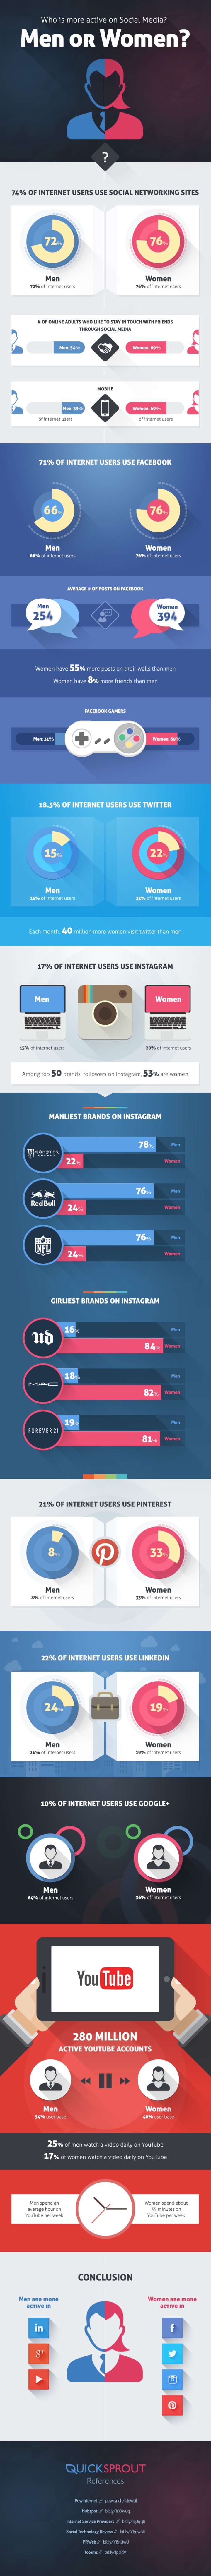 Who uses social media more?